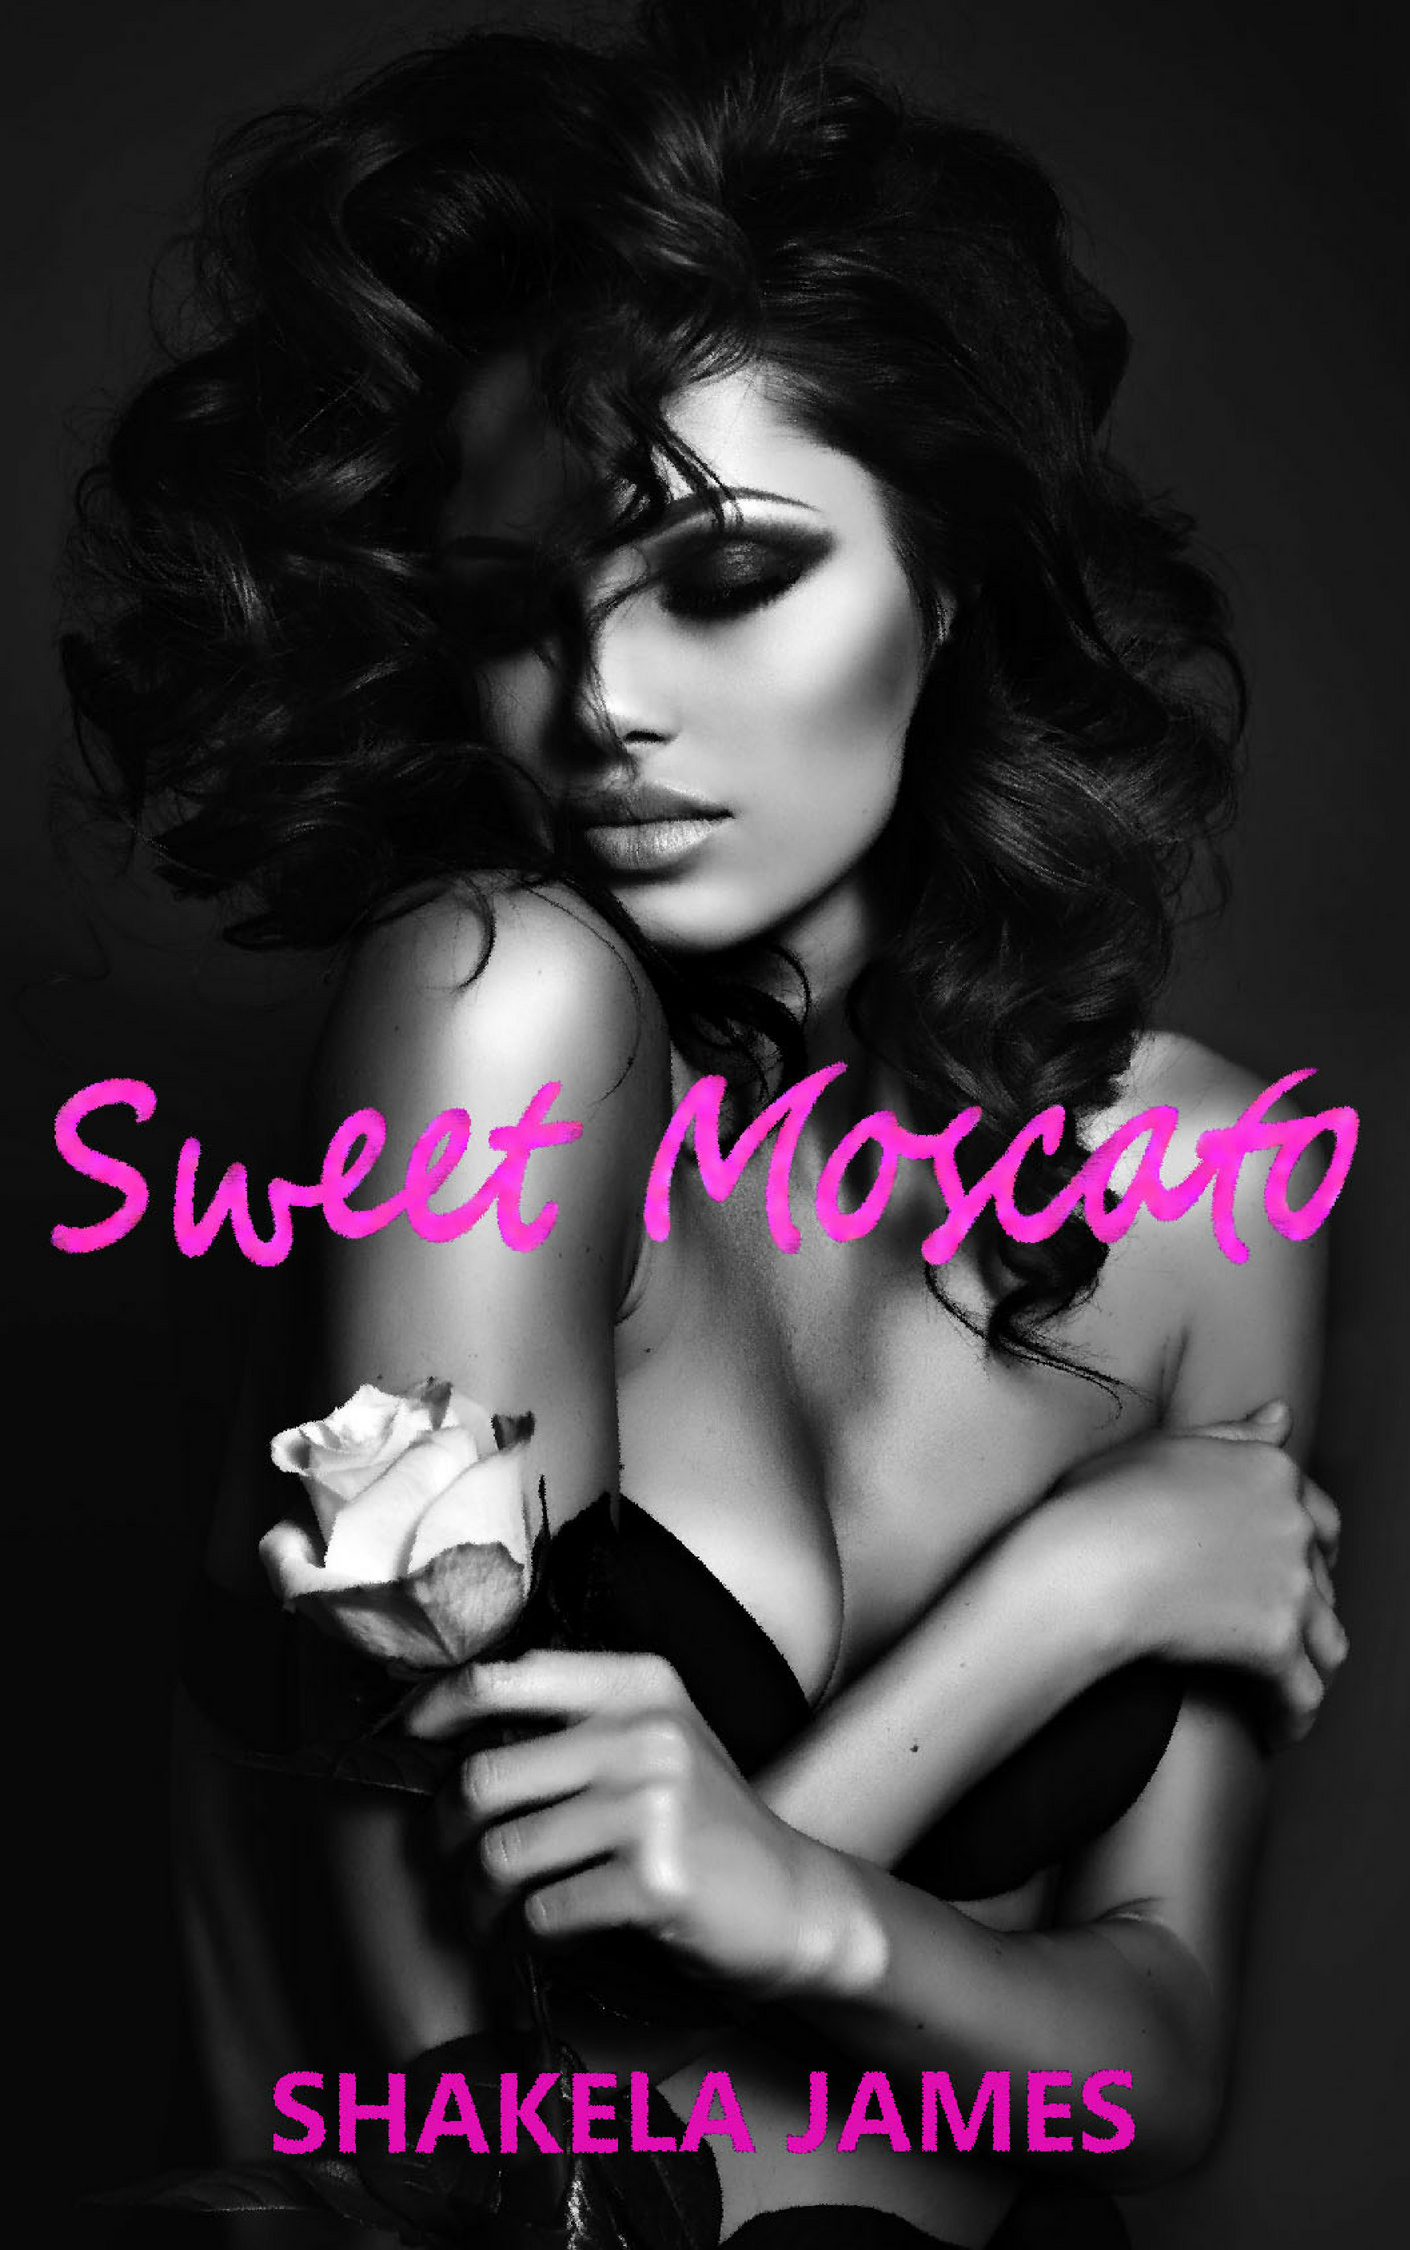 Sweet Moscato